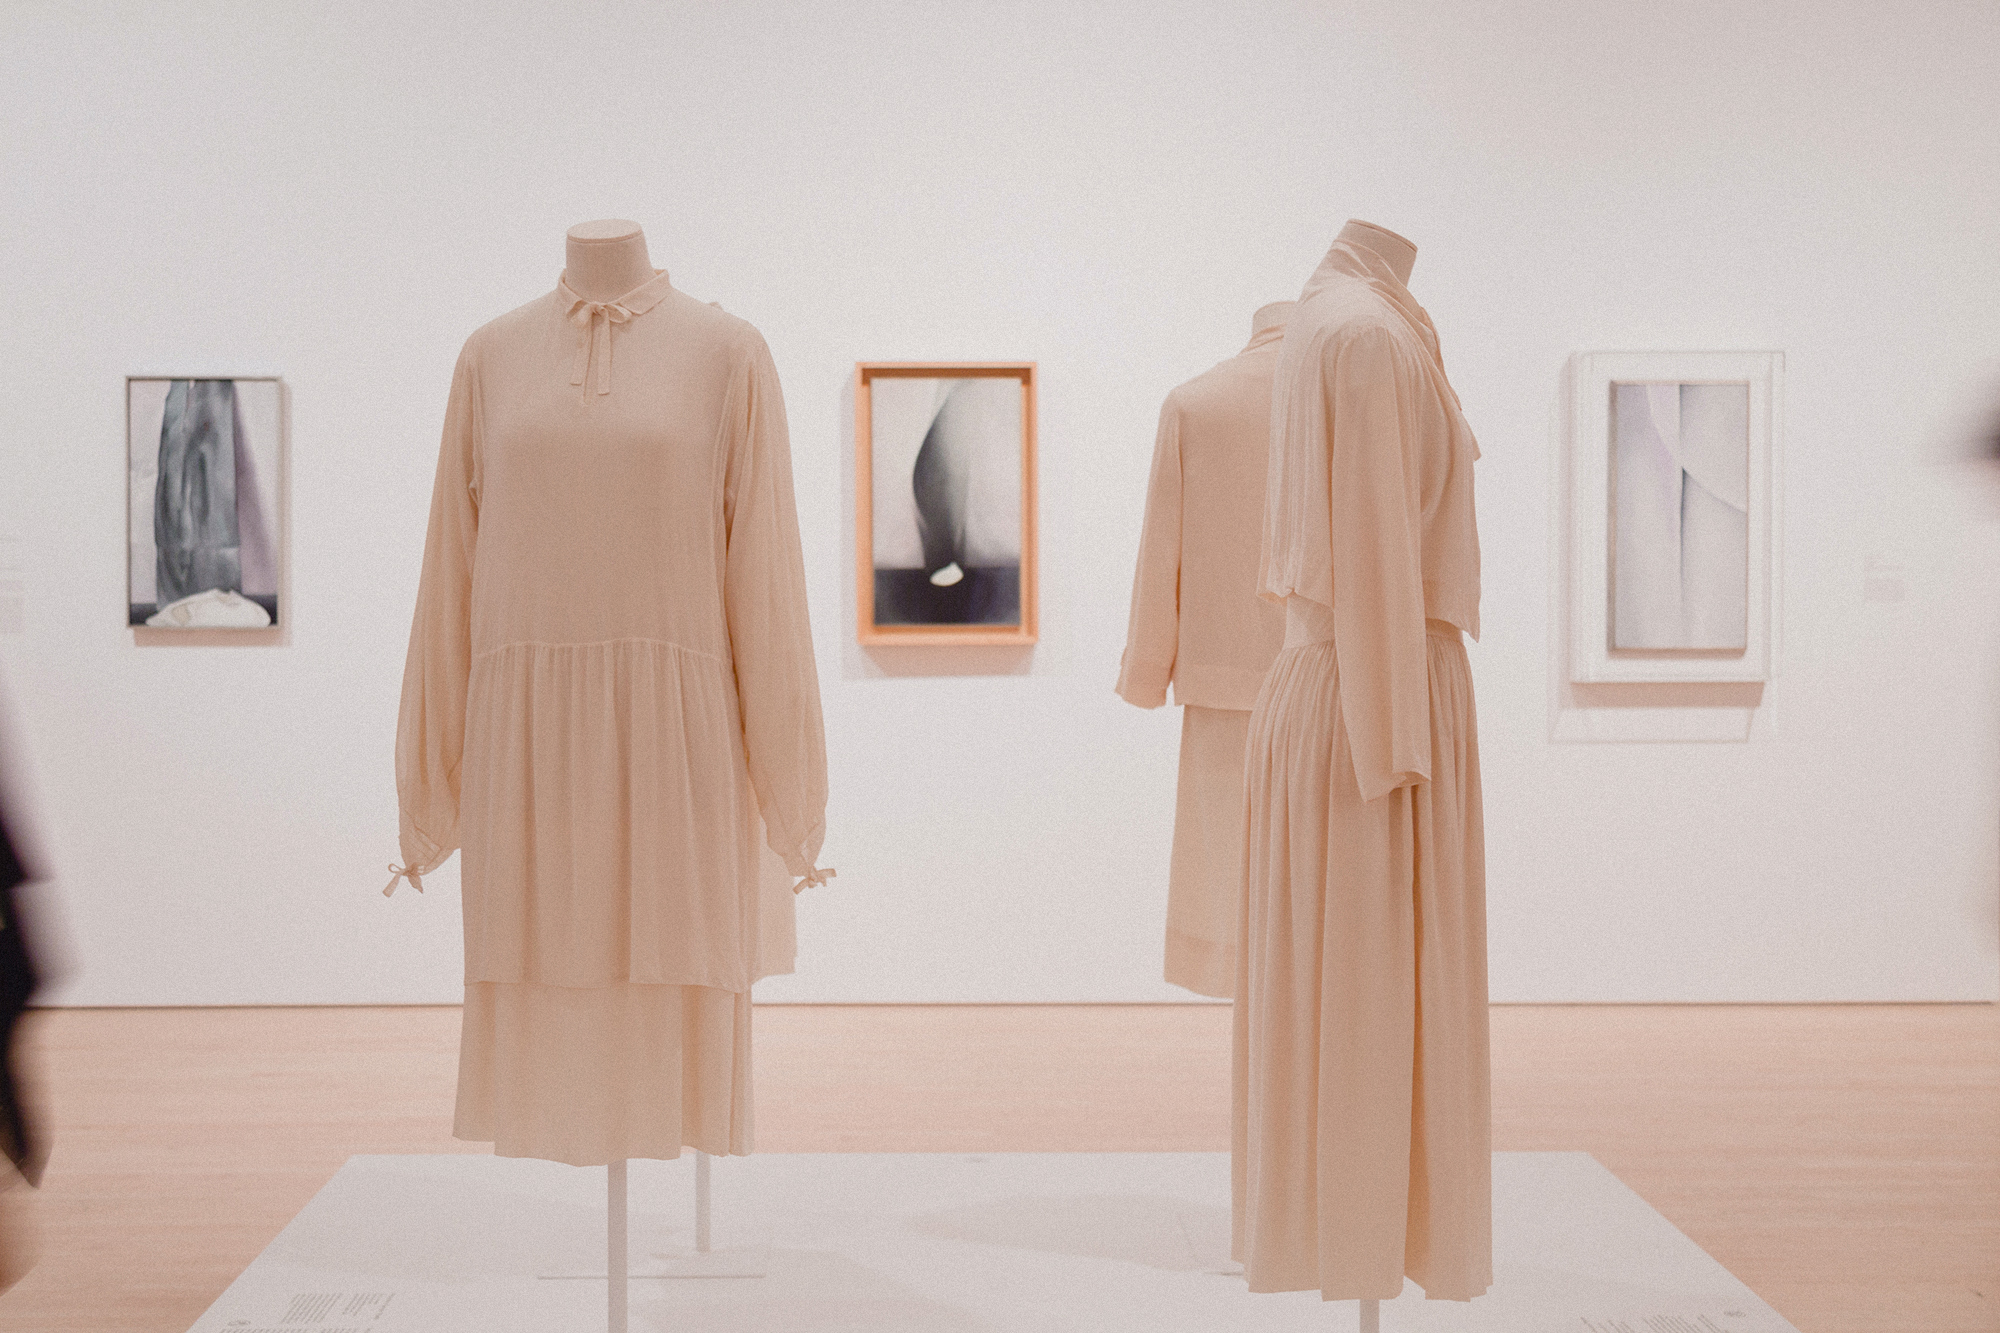 "Georgia O'Keefe: Living Modern" at the Brooklyn Museum